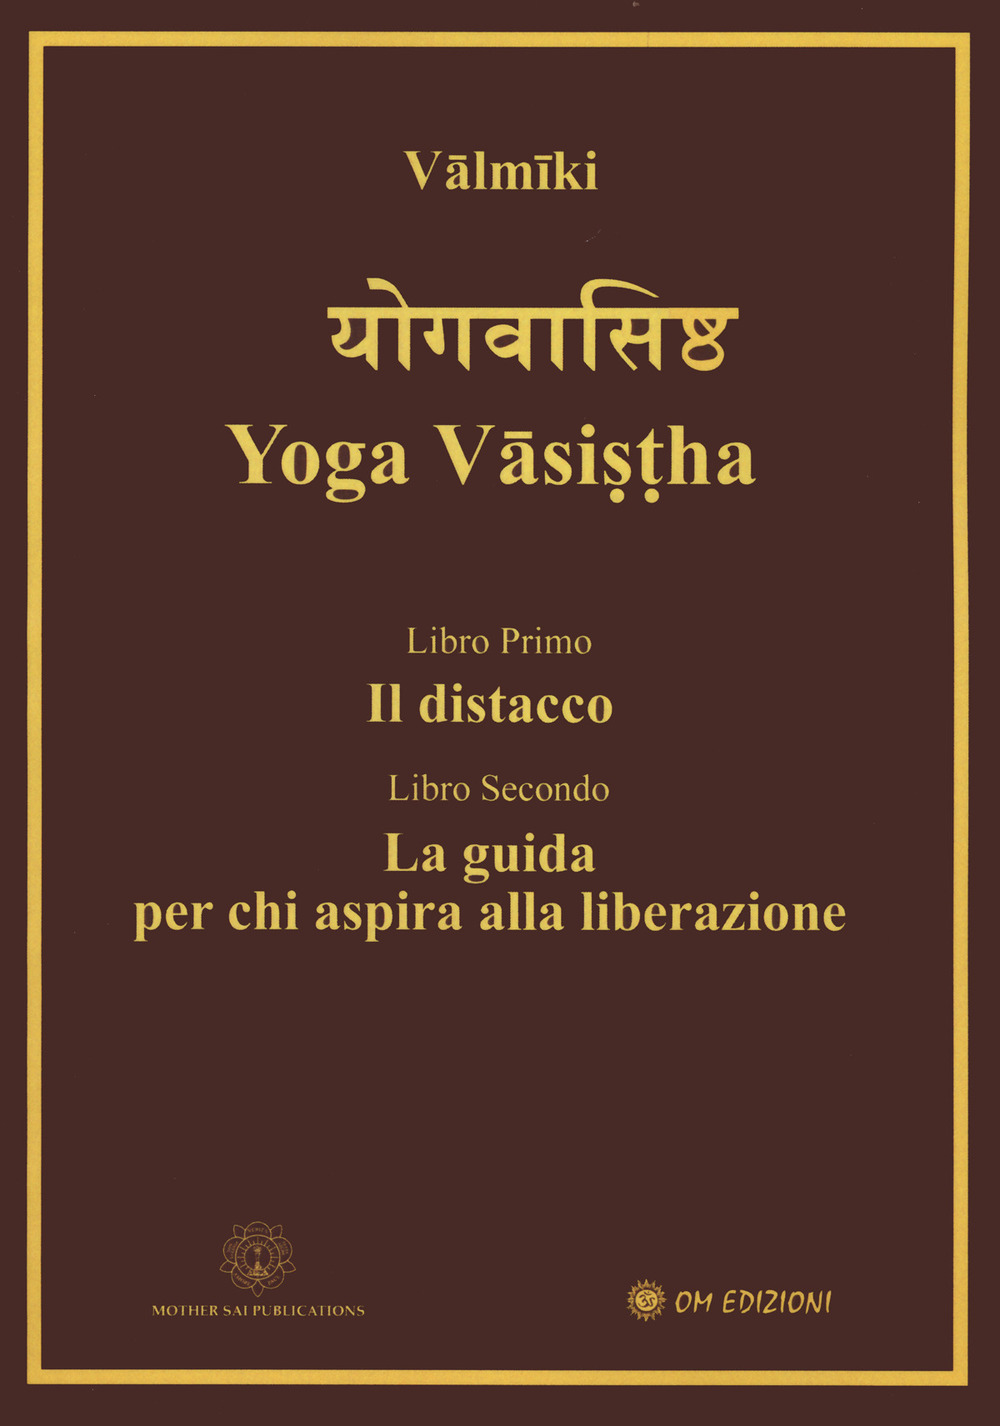 Yoga vasistha